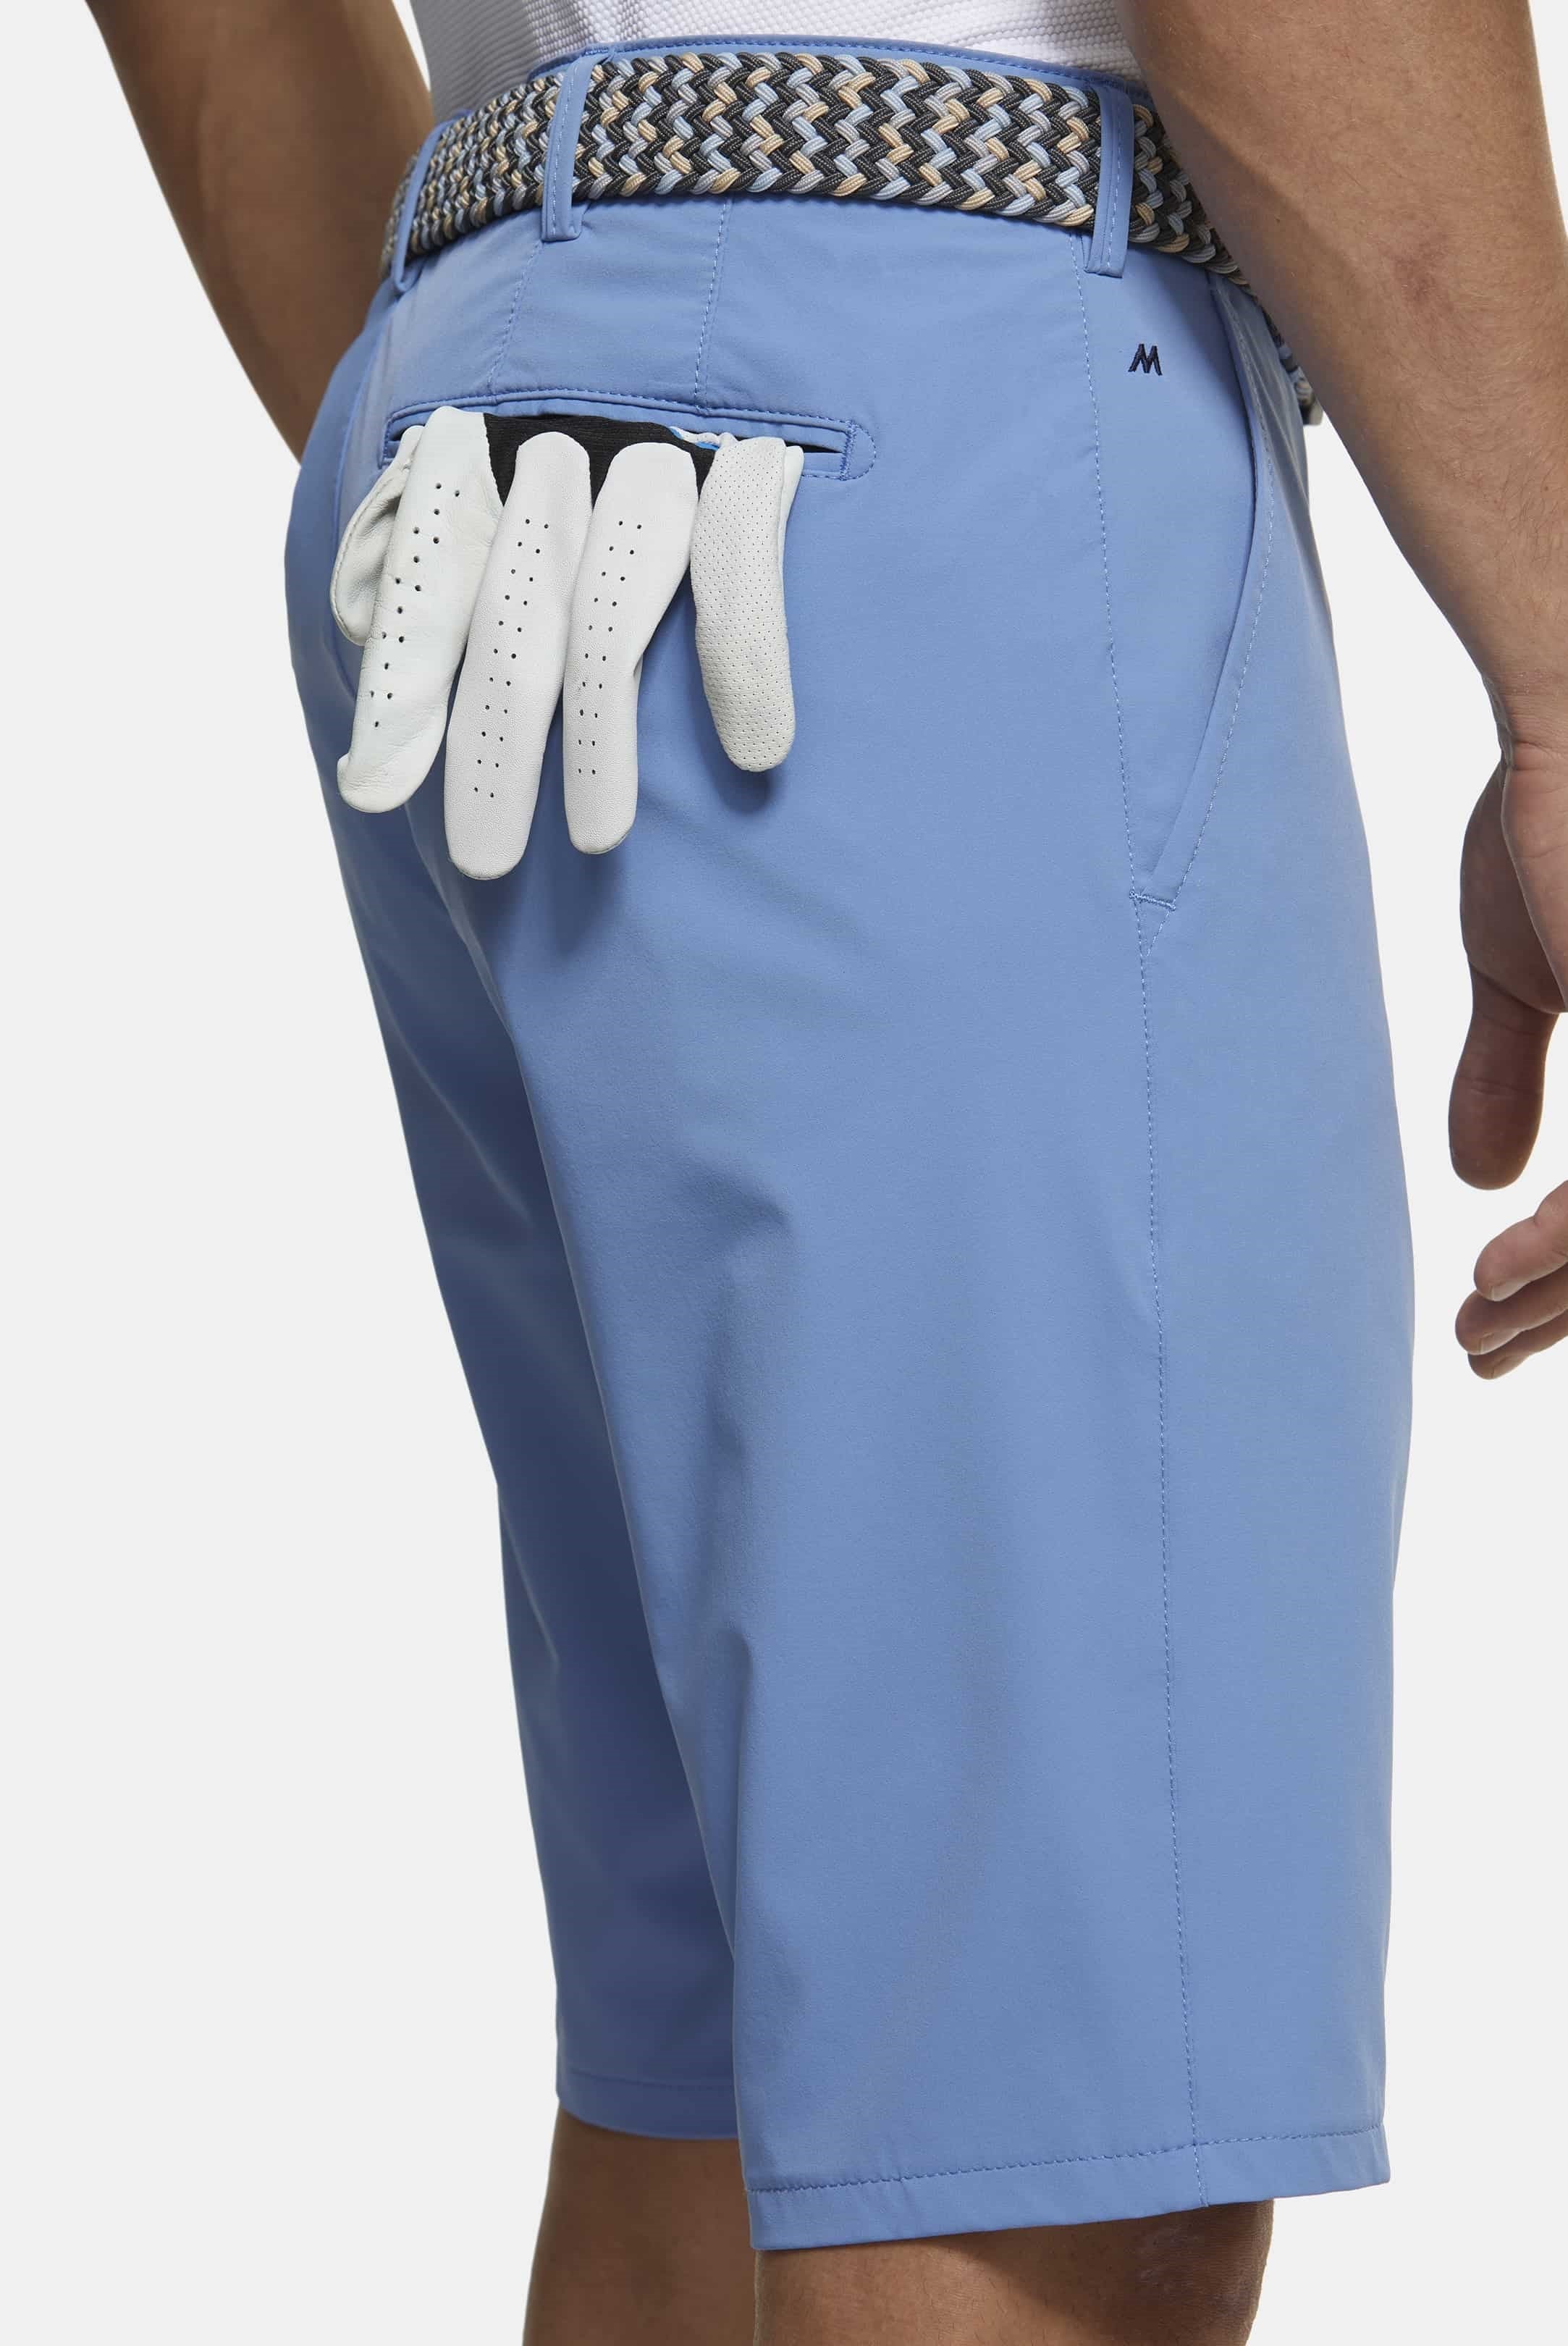 MEYER Golf Shorts - St. Andrews 8070 High Performance Cotton - Light Blue